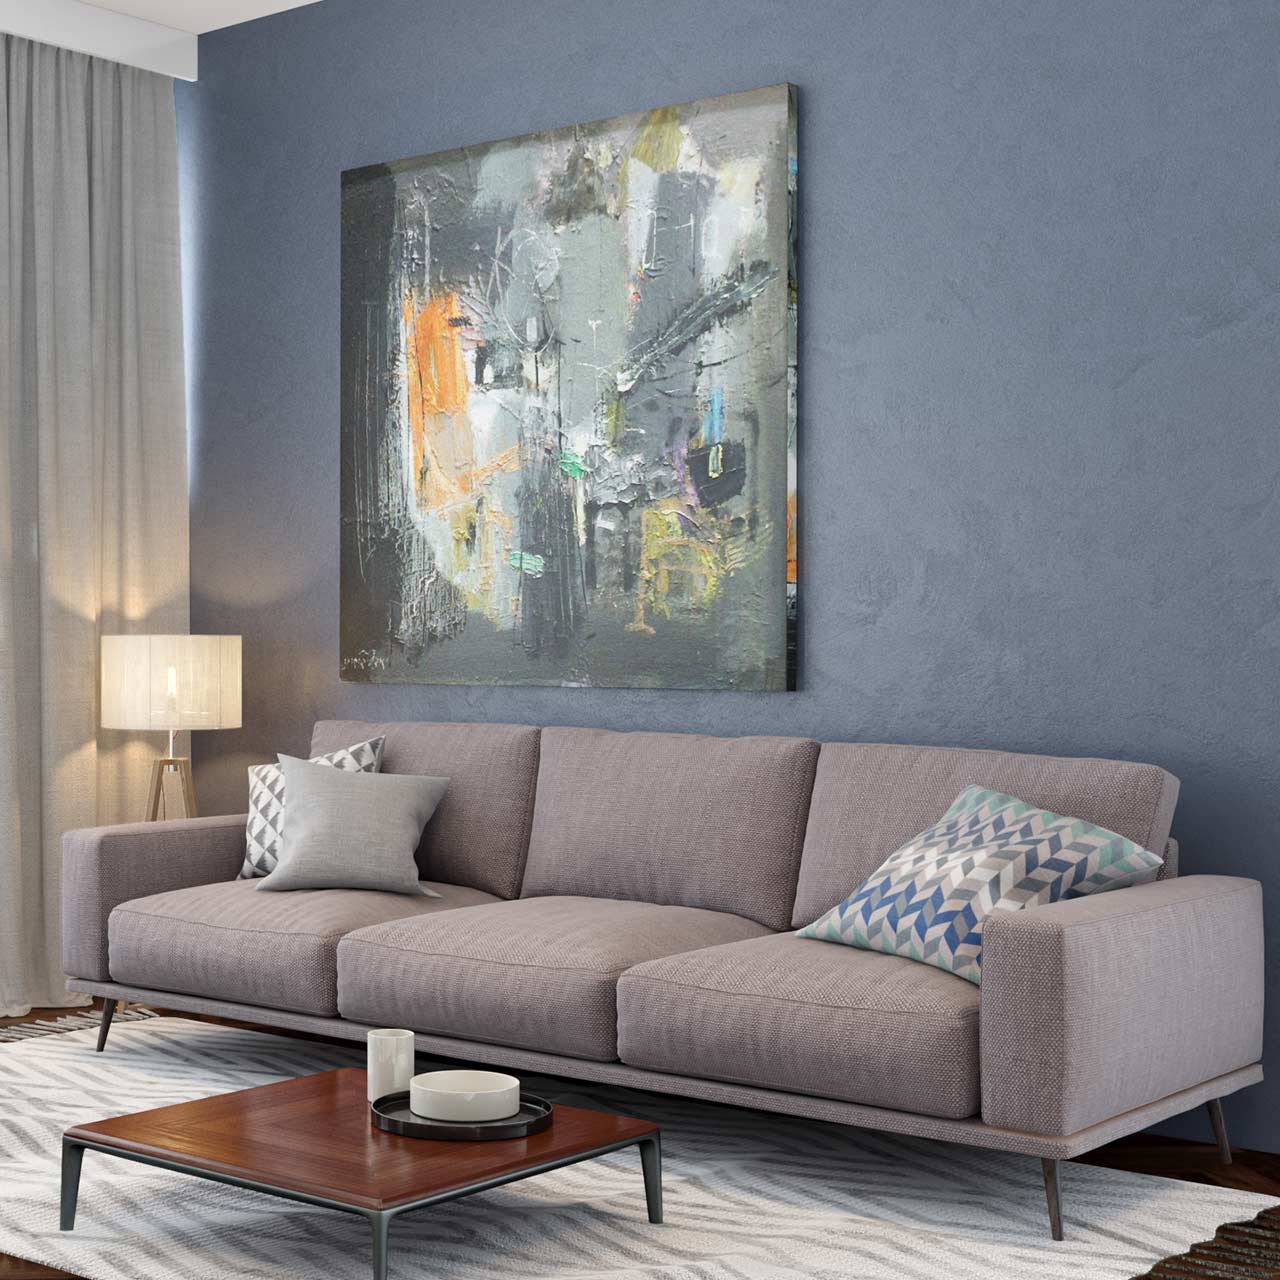 Choosing a sofa for your living room interior